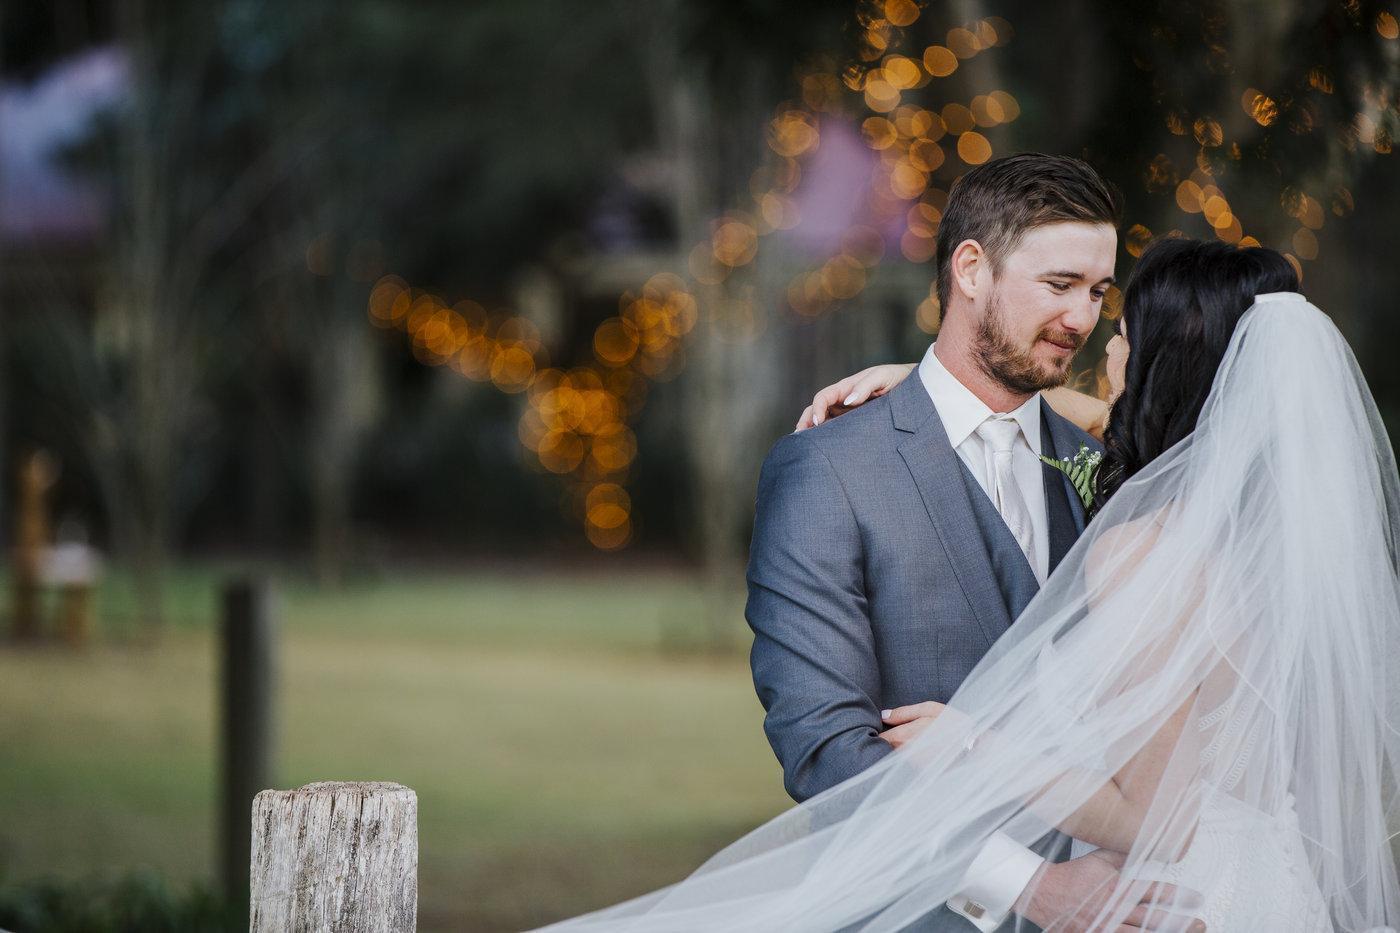 Wedding Photography Toowoomba couple embracing under lights